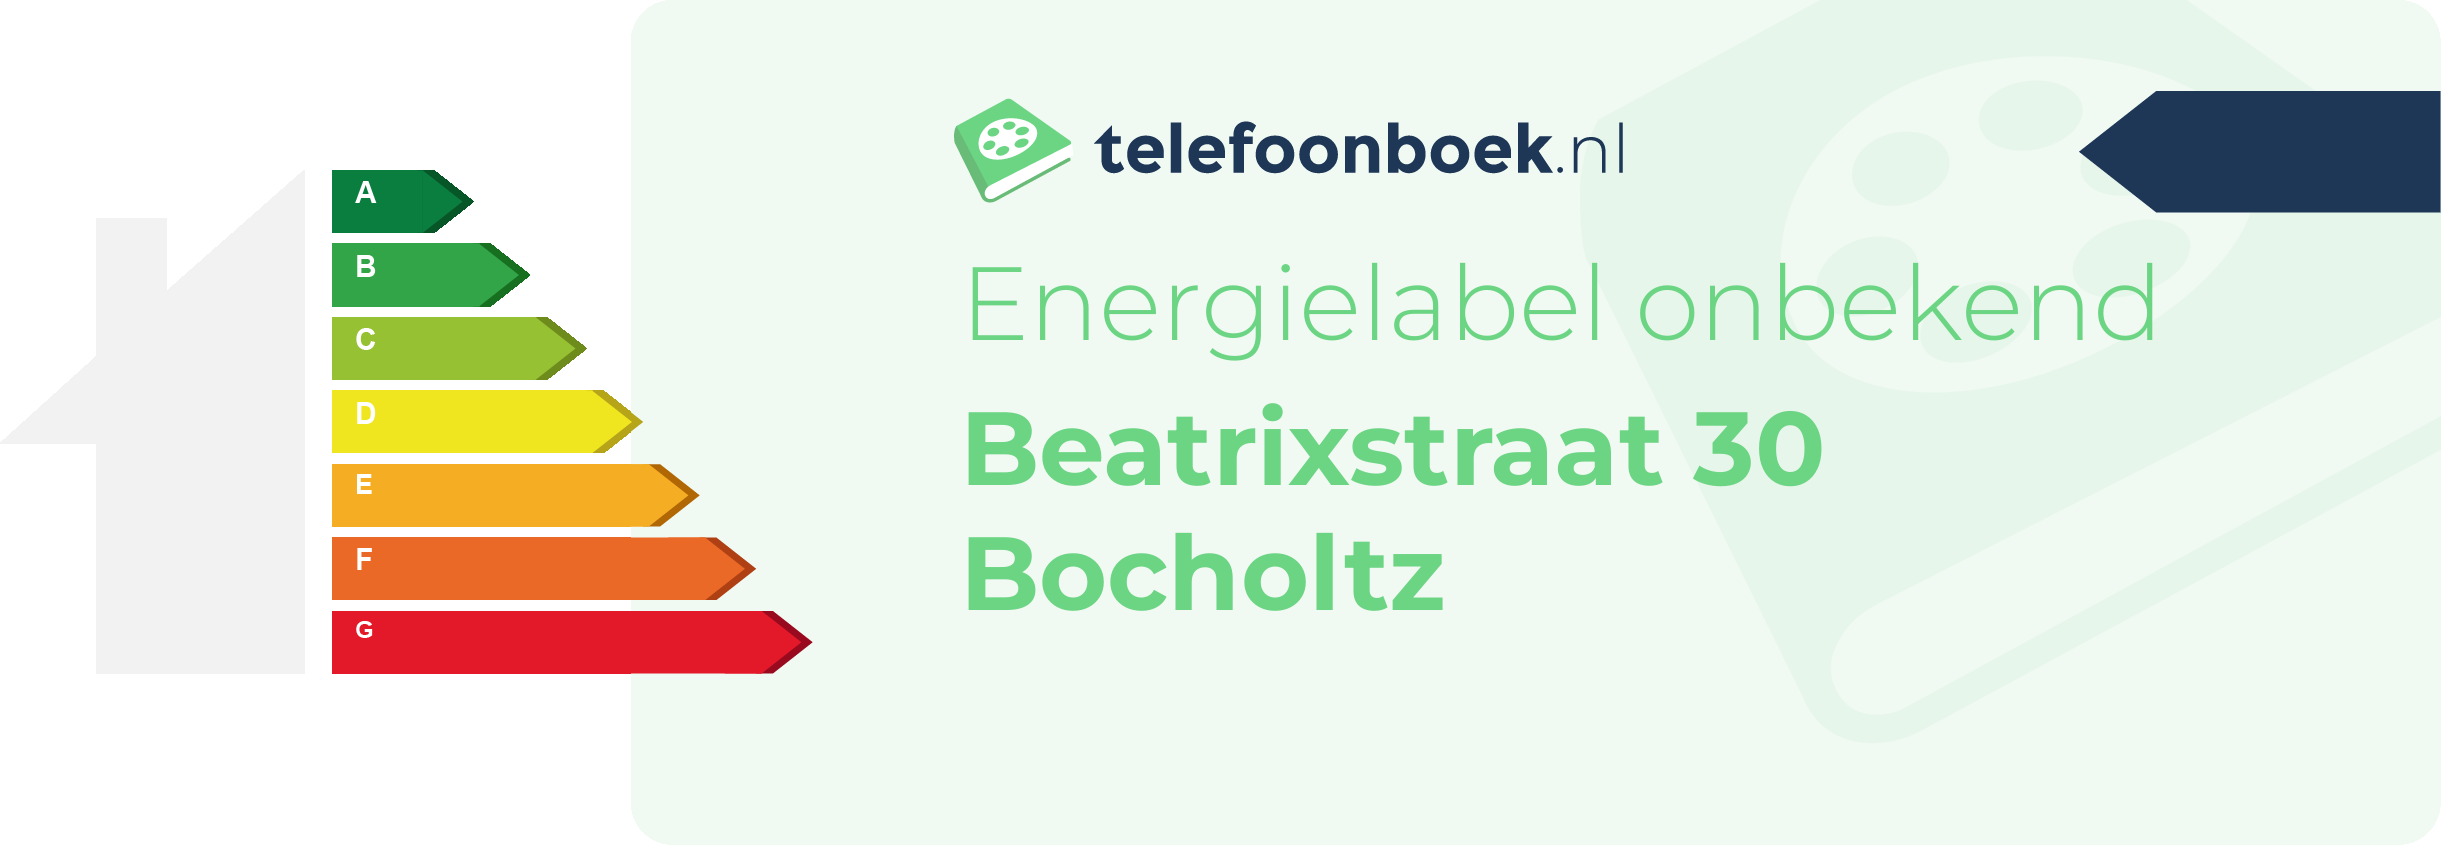 Energielabel Beatrixstraat 30 Bocholtz